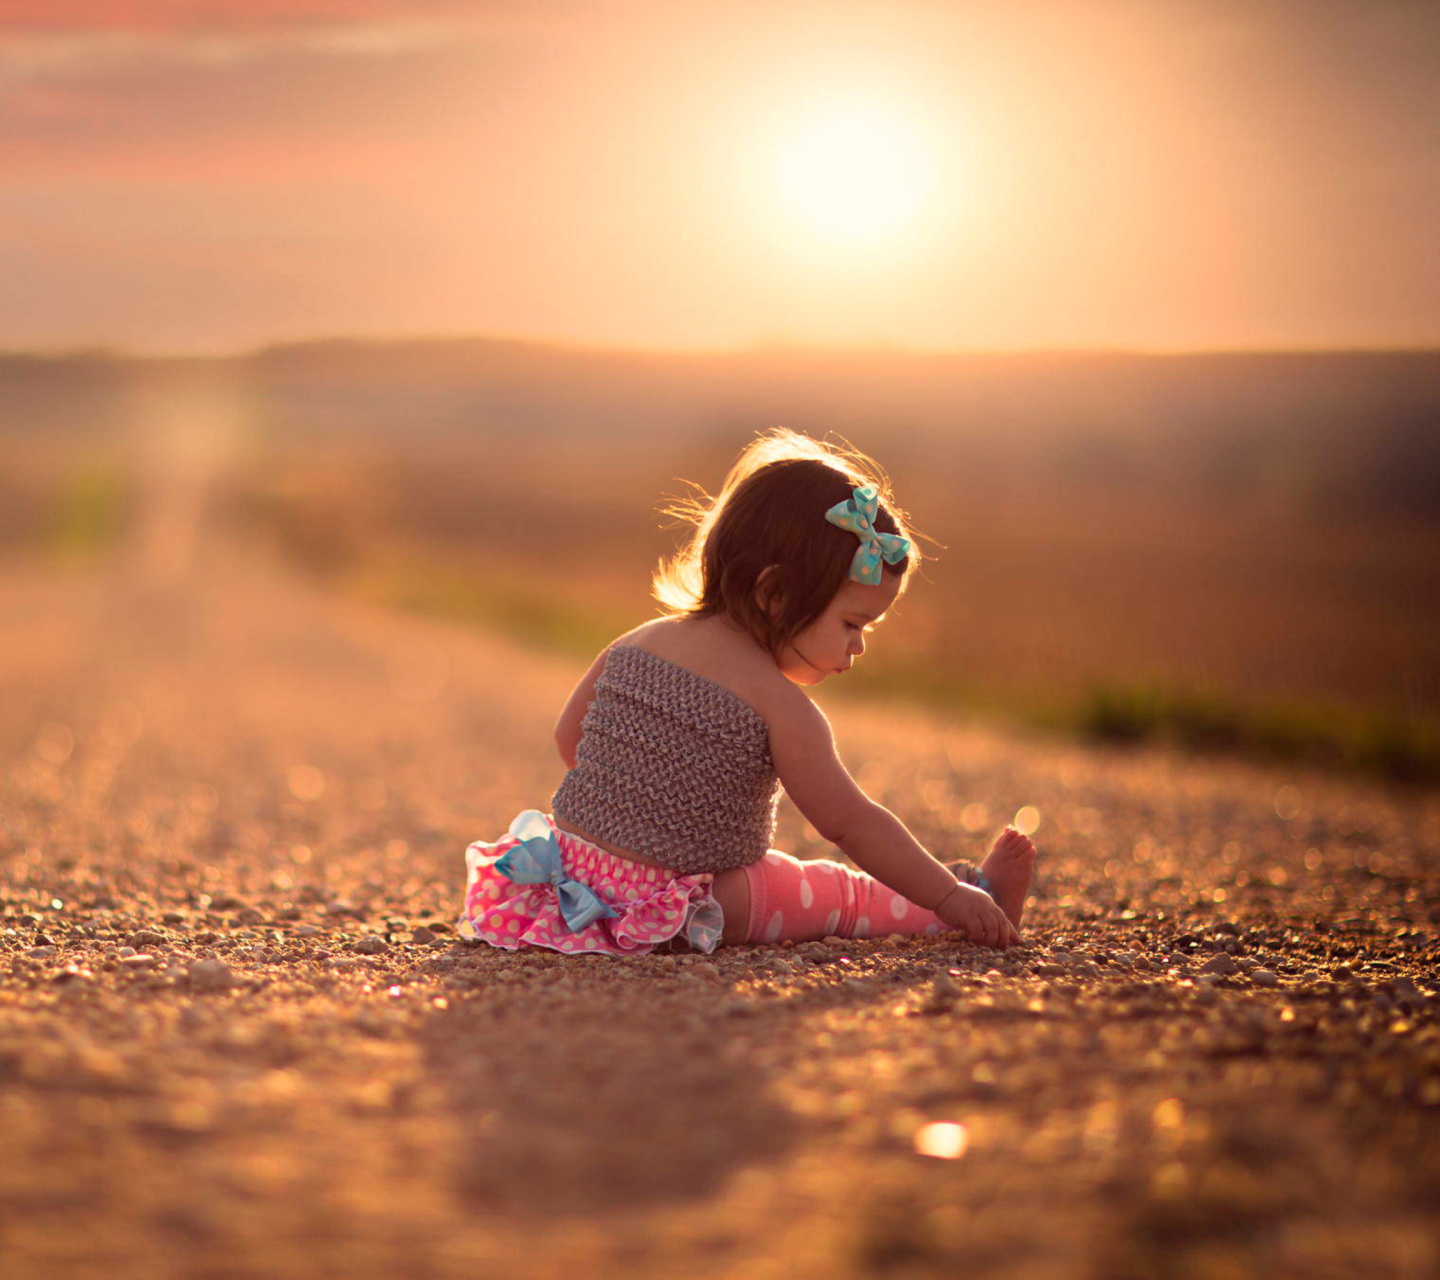 Обои Child On Road At Sunset 1440x1280